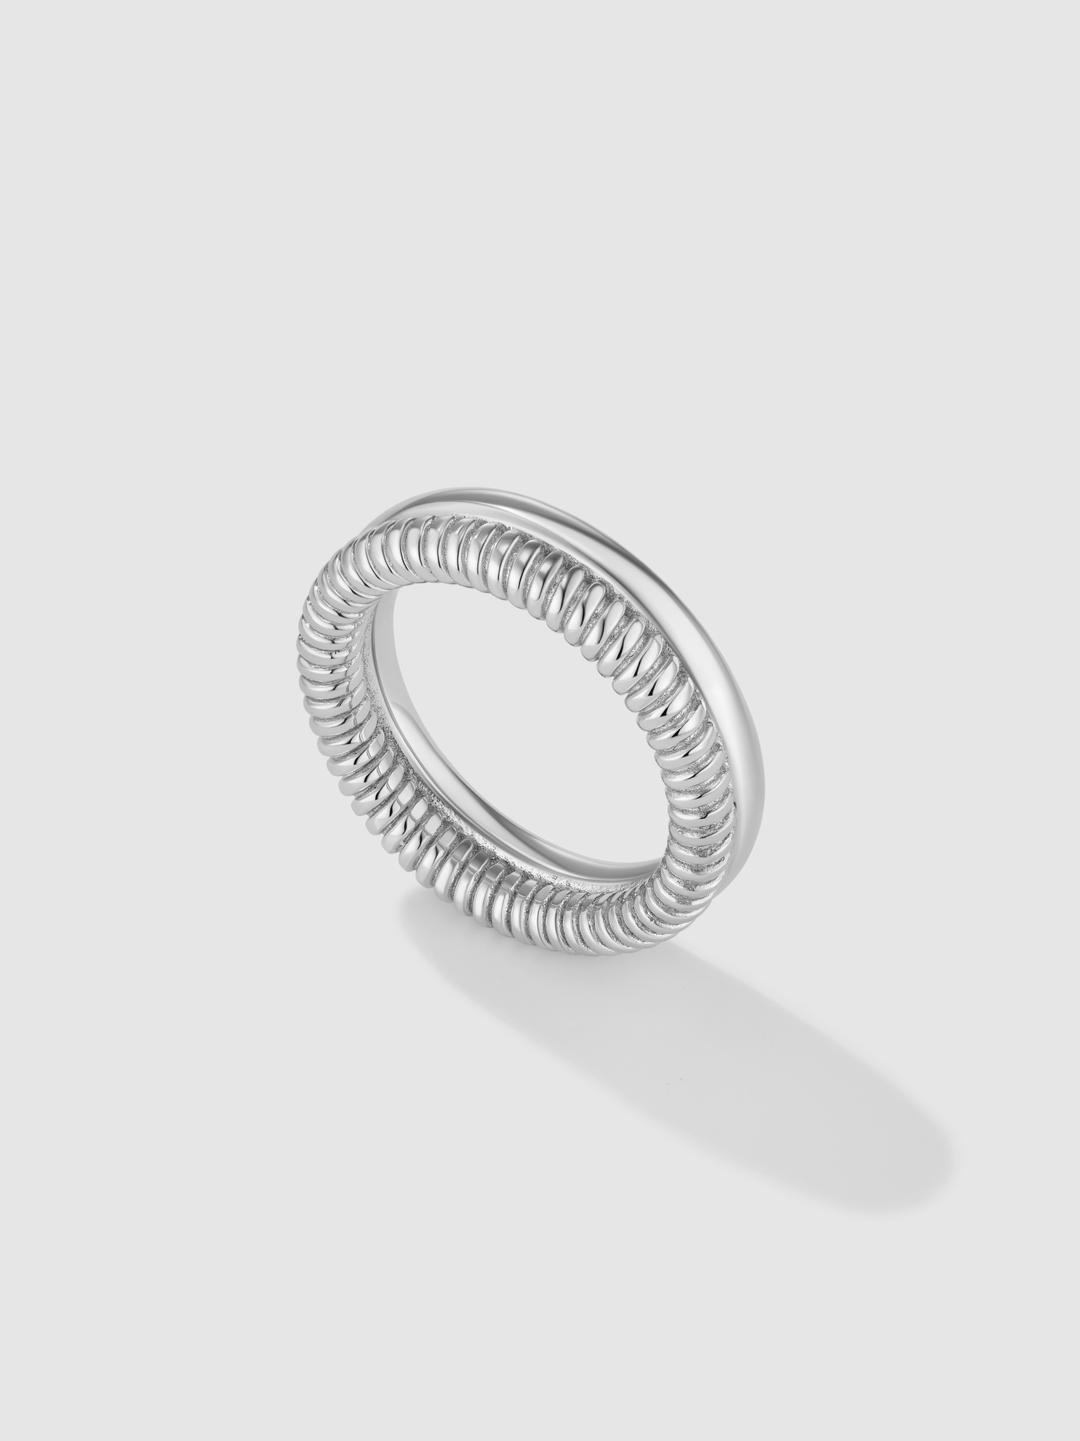 Slinky Ring